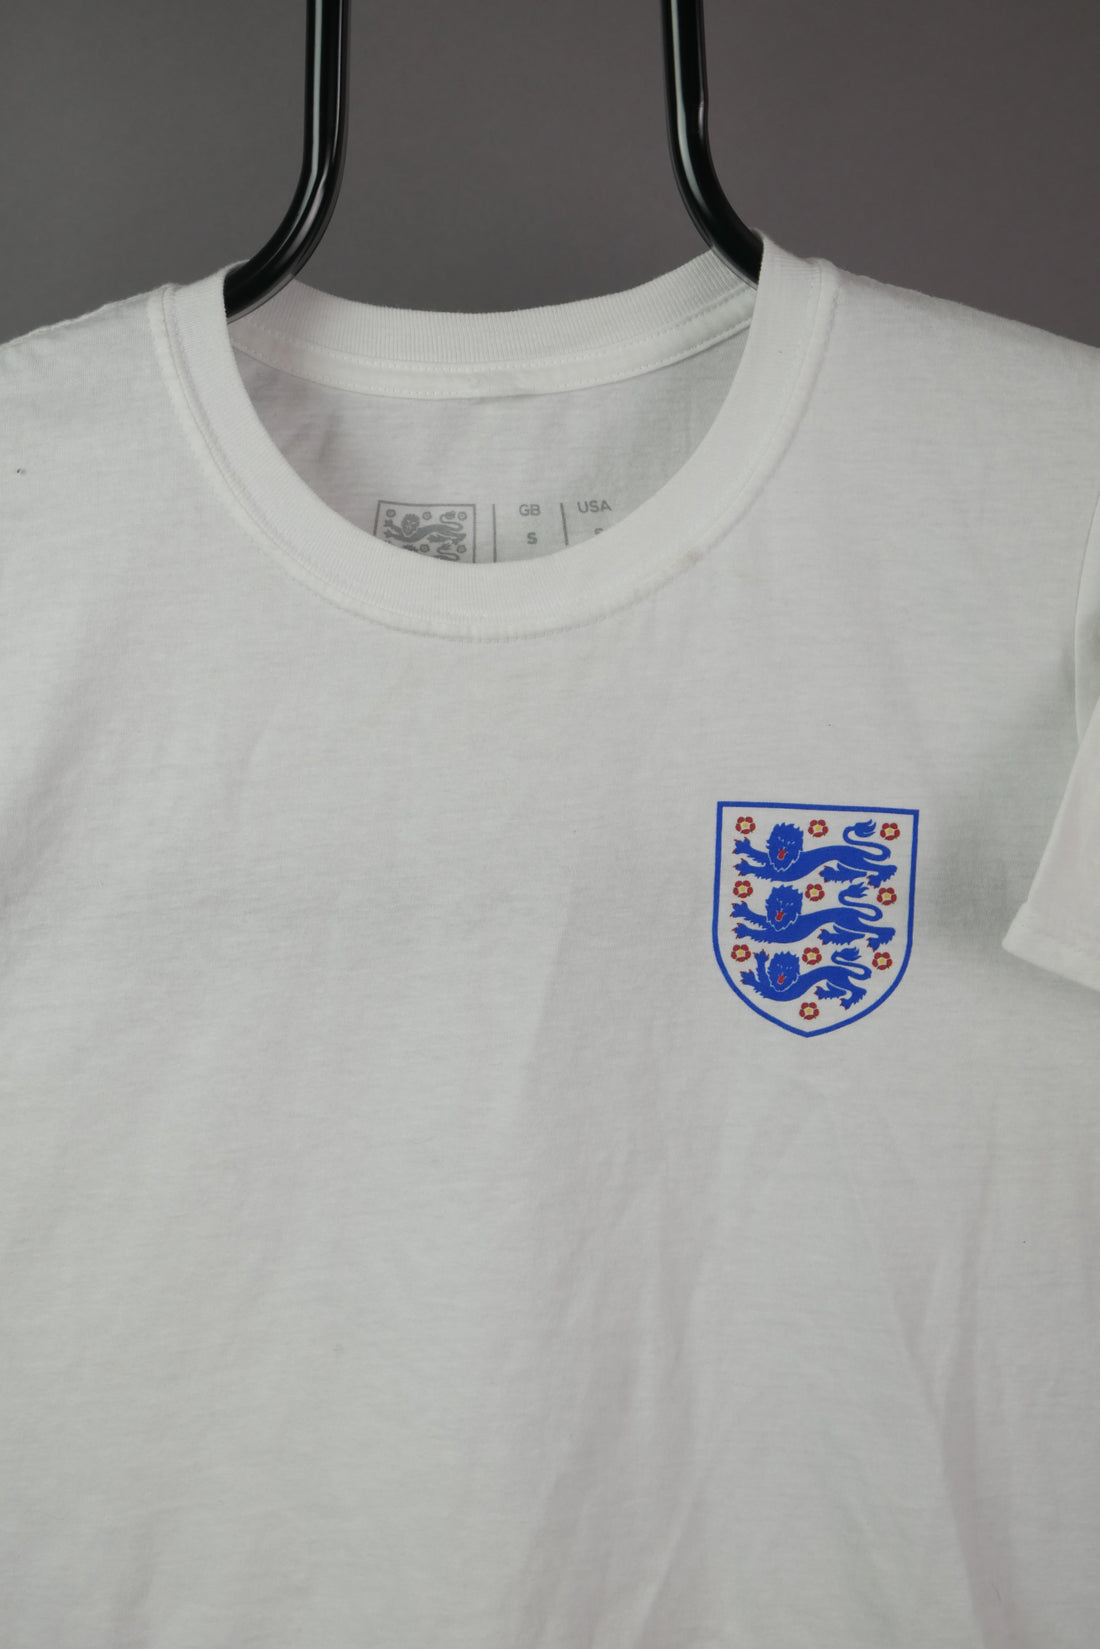 The England Jack Grealish T-Shirt (S)